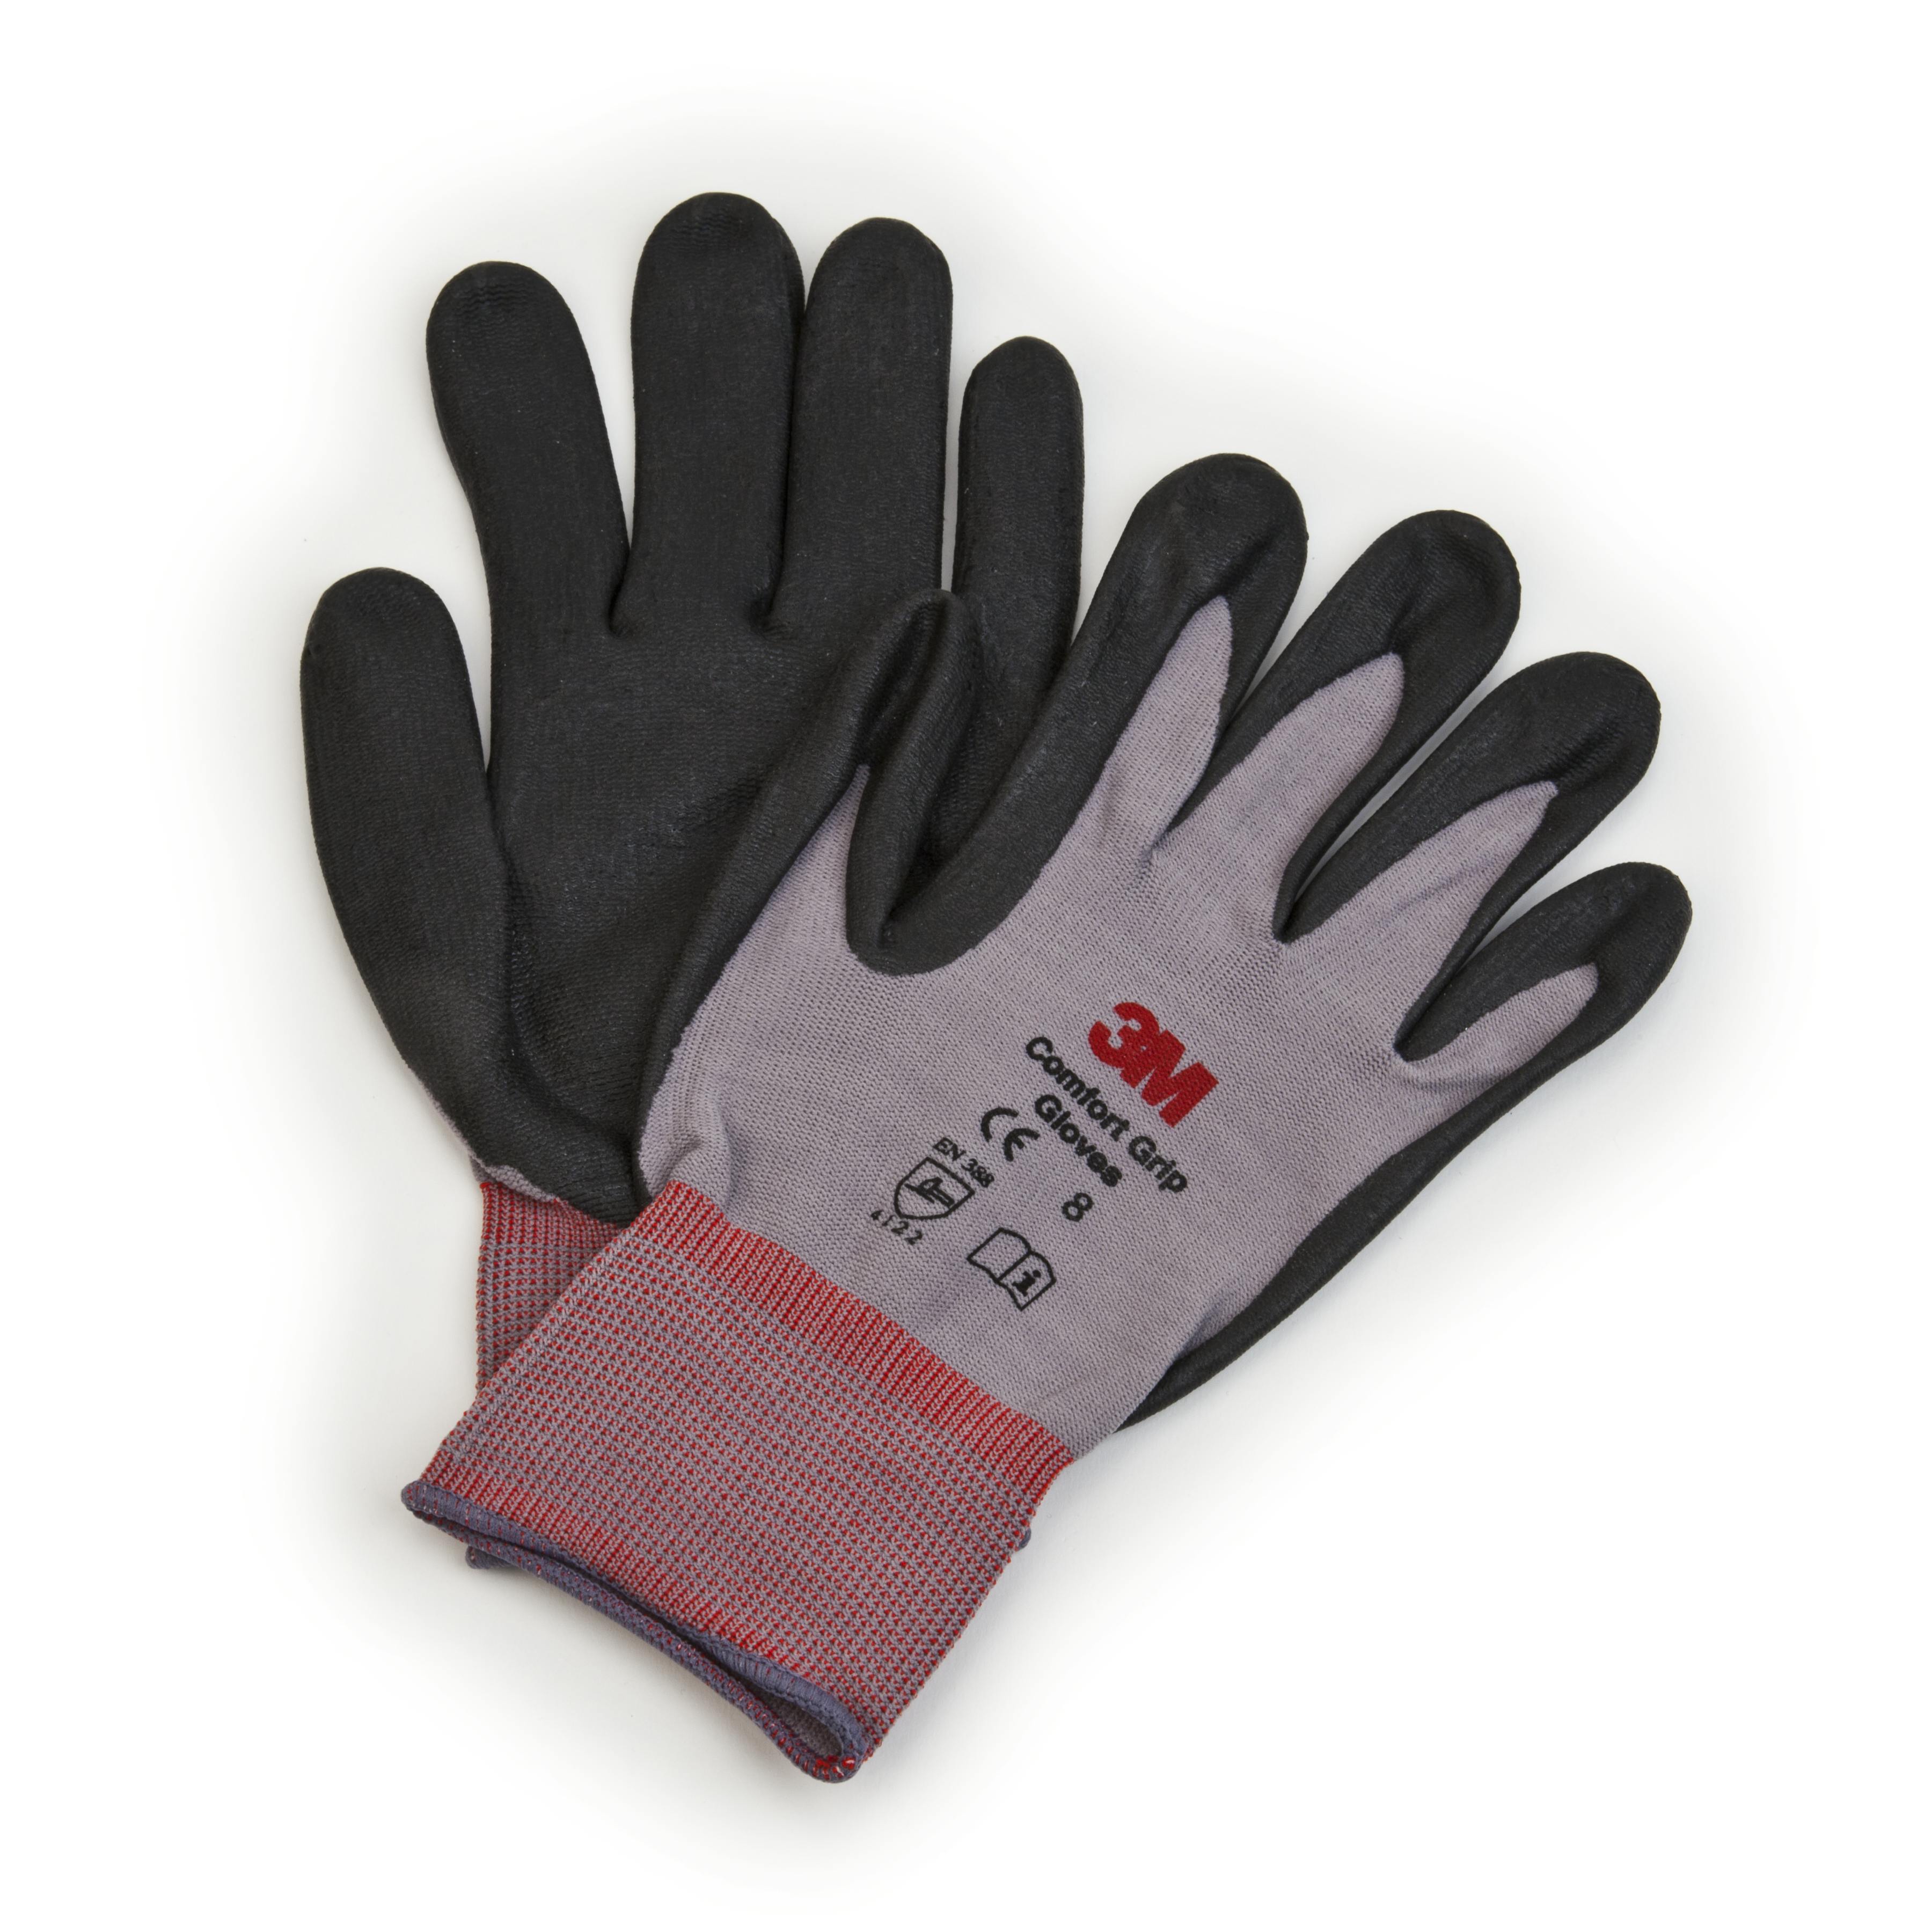 3M™ Comfort Grip Glove CGM-GU, General Use, Size M, 6 Pair/Inner, 20 Inner/Case